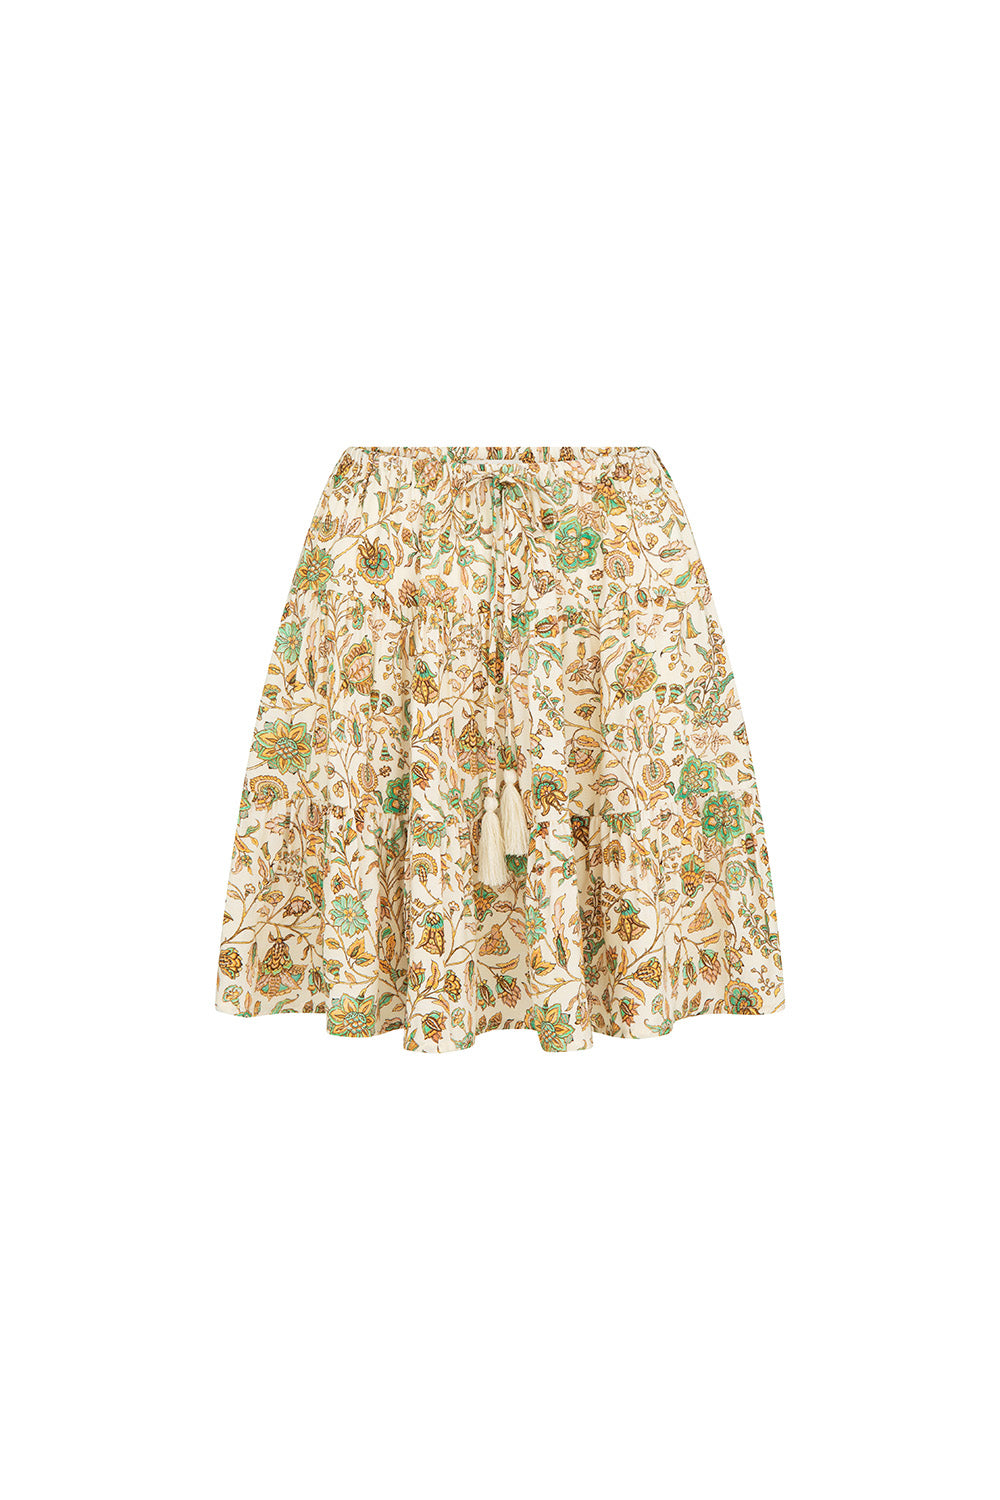 Sabba Mini Skirt in Eden Cream – Arnhem Clothing